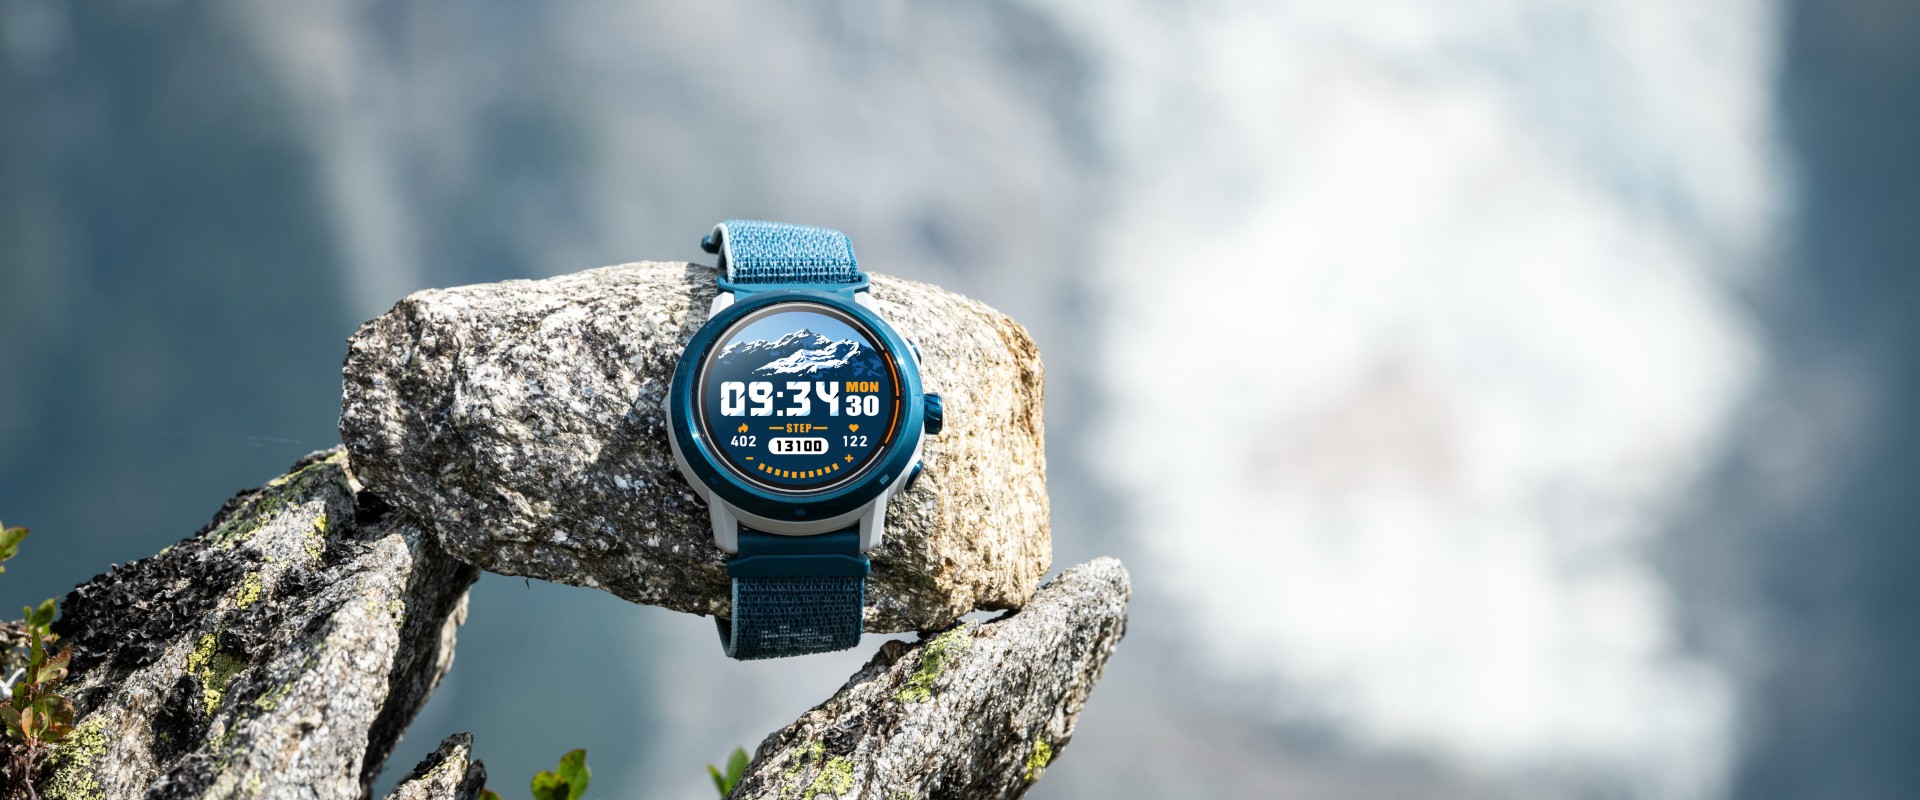 FIRST LOOK: Coros Apex 2 Pro 'Chamonix Edition' Smartwatch | The